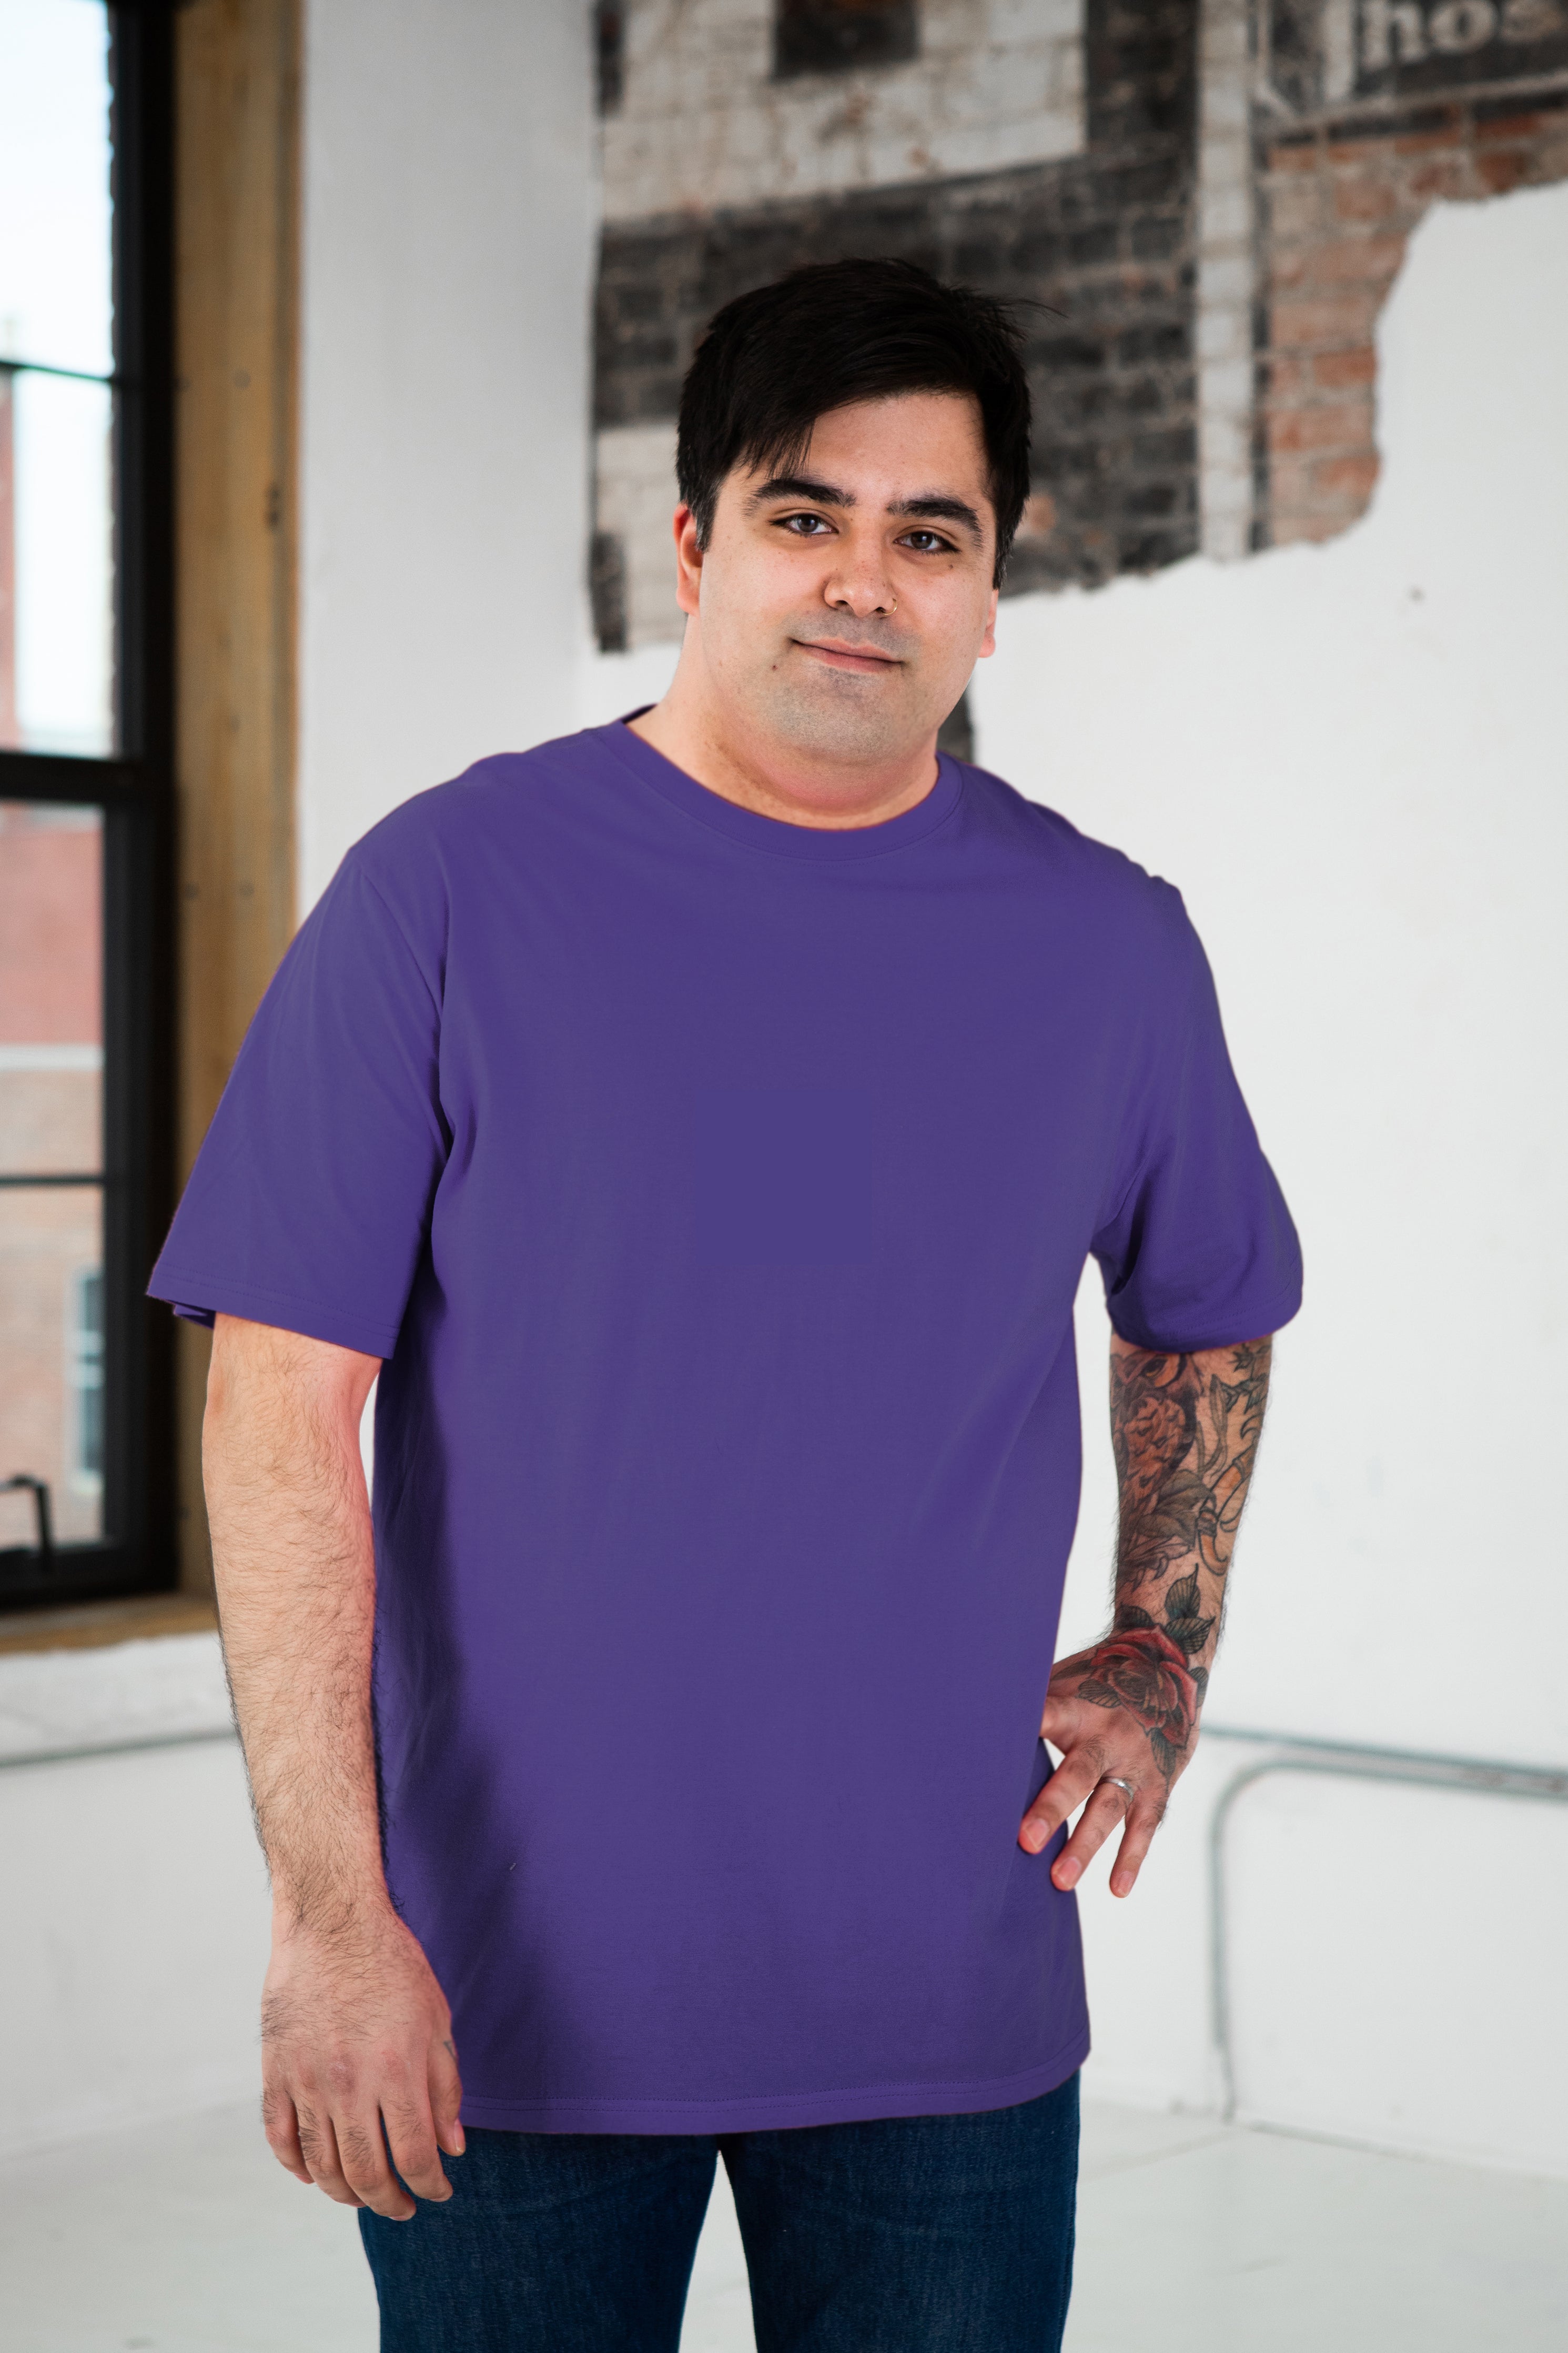 Male Model wearing GOEX Unisex and Men's Cotton Tee in Purple